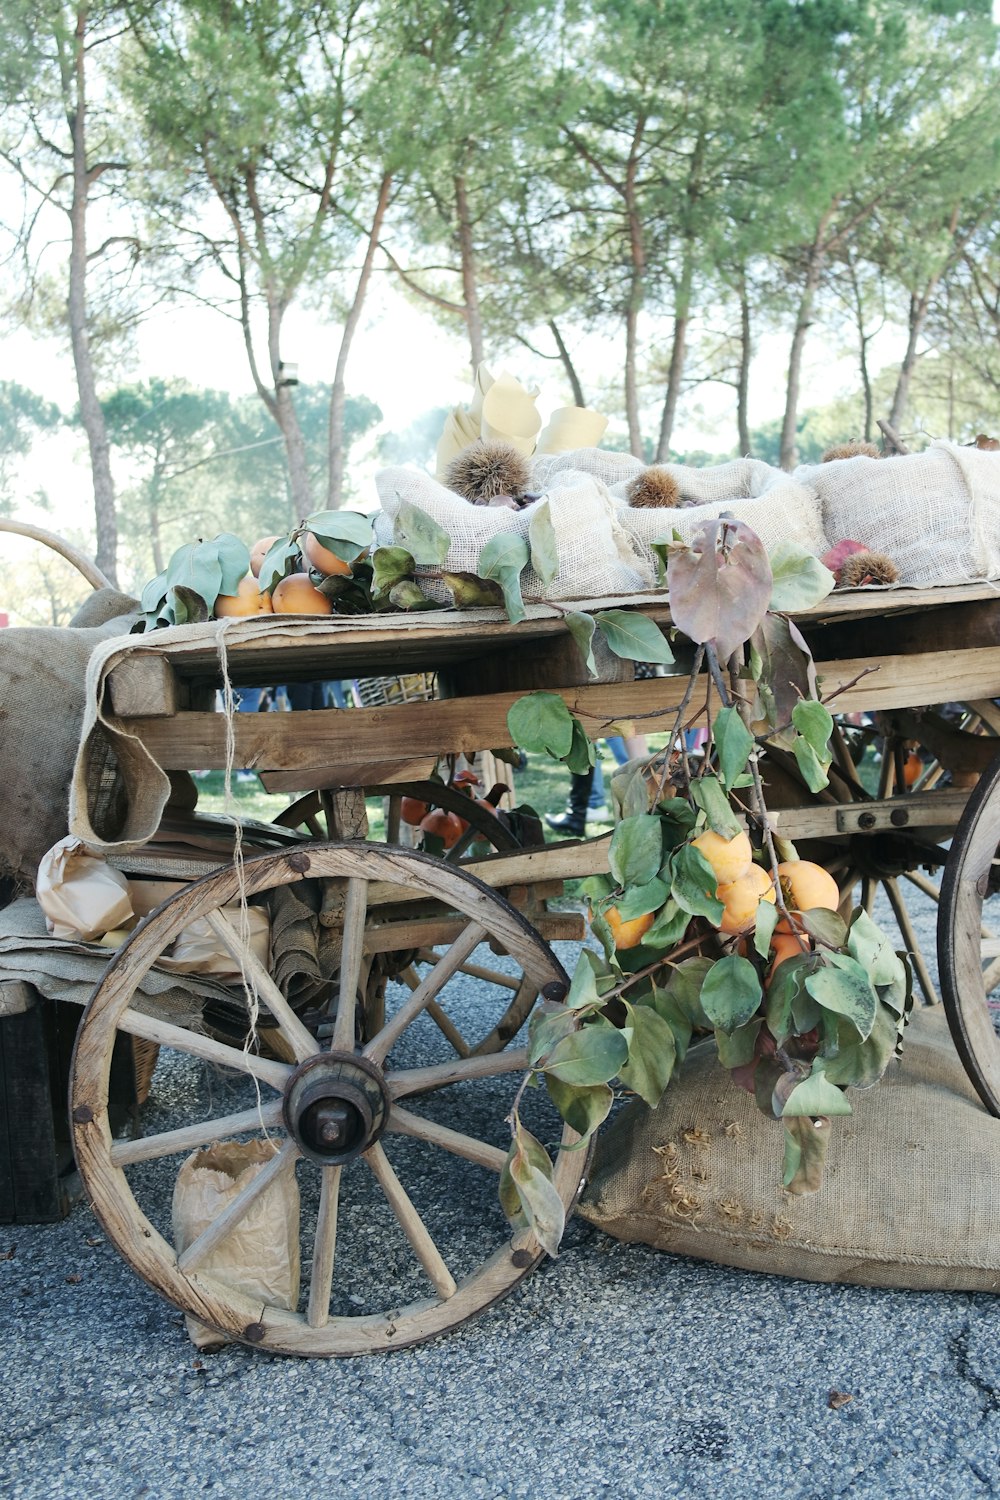 a cart full of vegetables